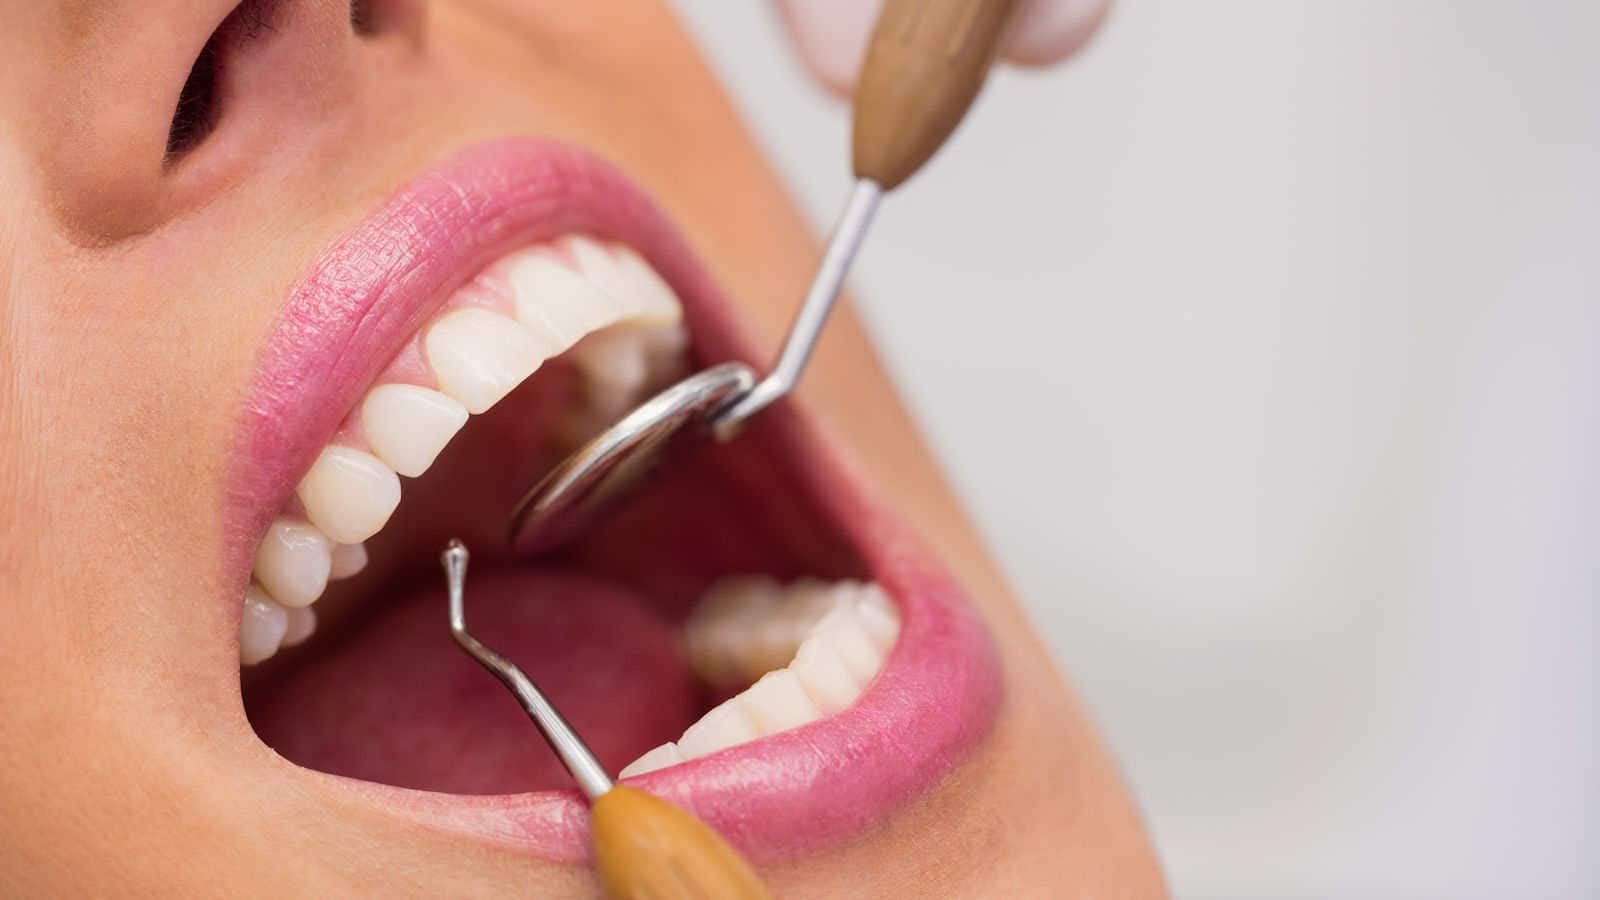 Western Dental and Orthodontics of Chula Vista